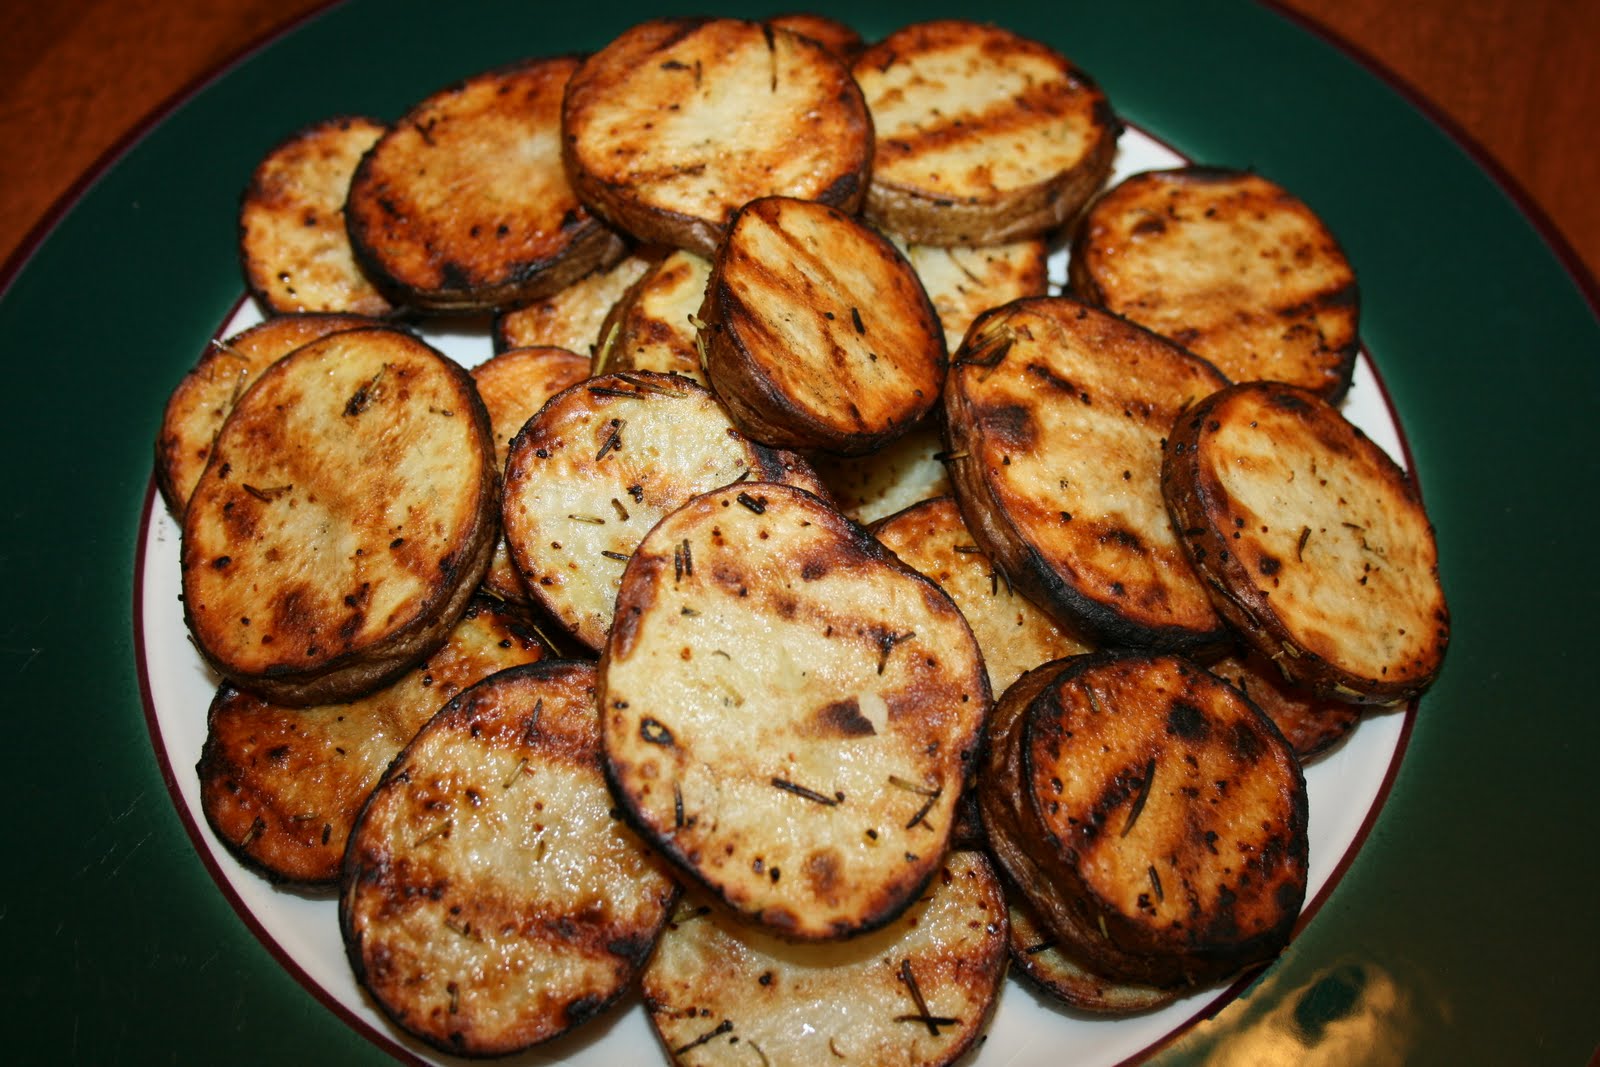 Burnt Offerings: Grilled Russet Potato Slices